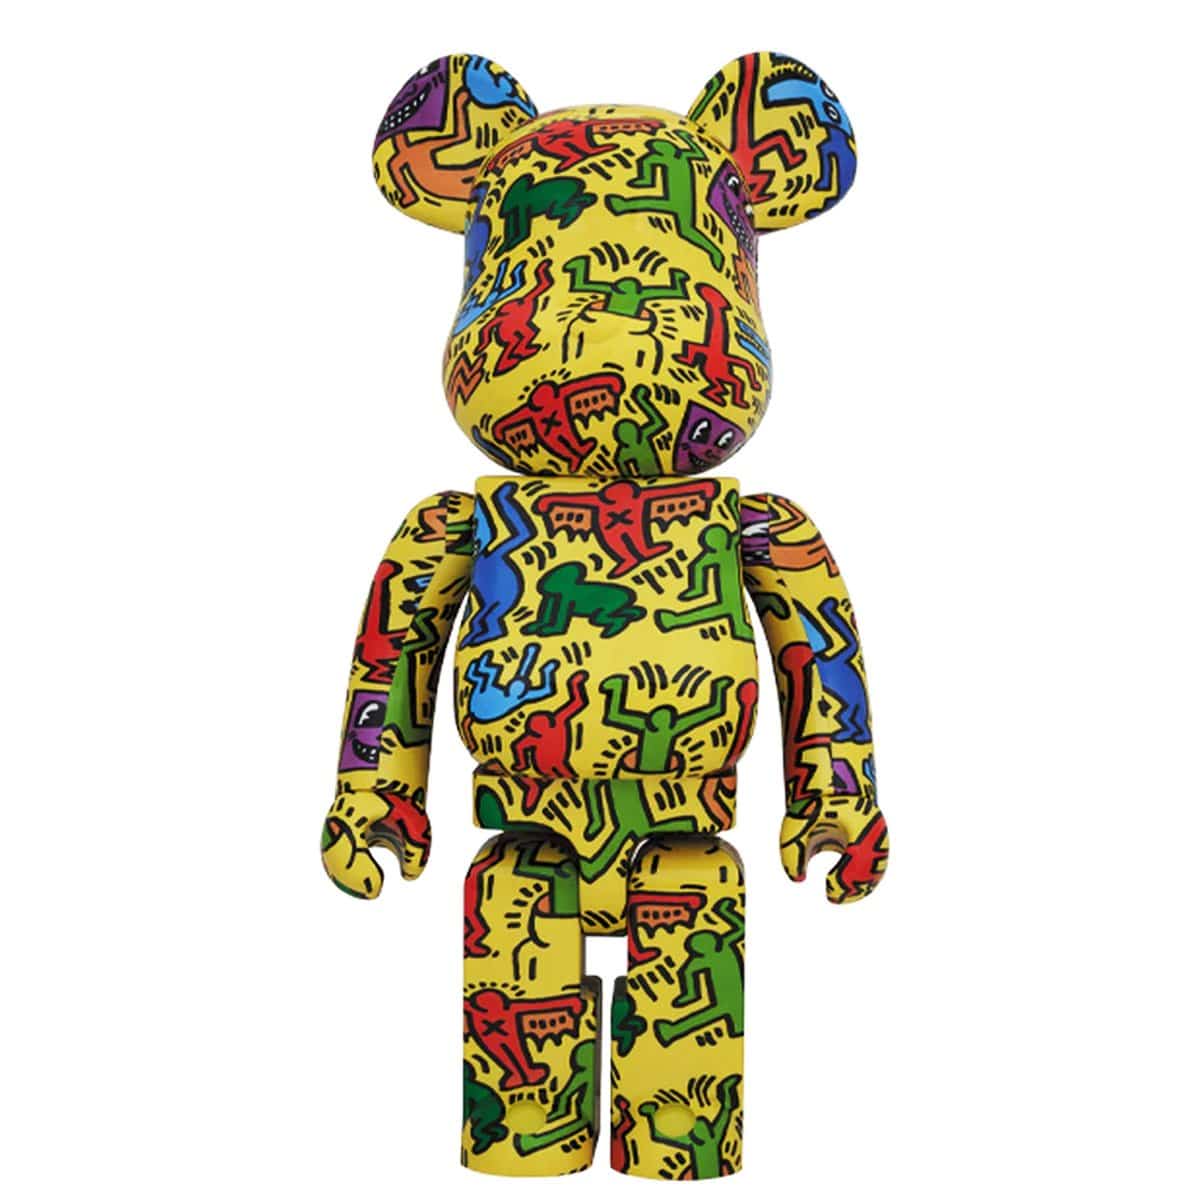 Keith Haring #5 Bearbrick 1000% by Medicom Toy